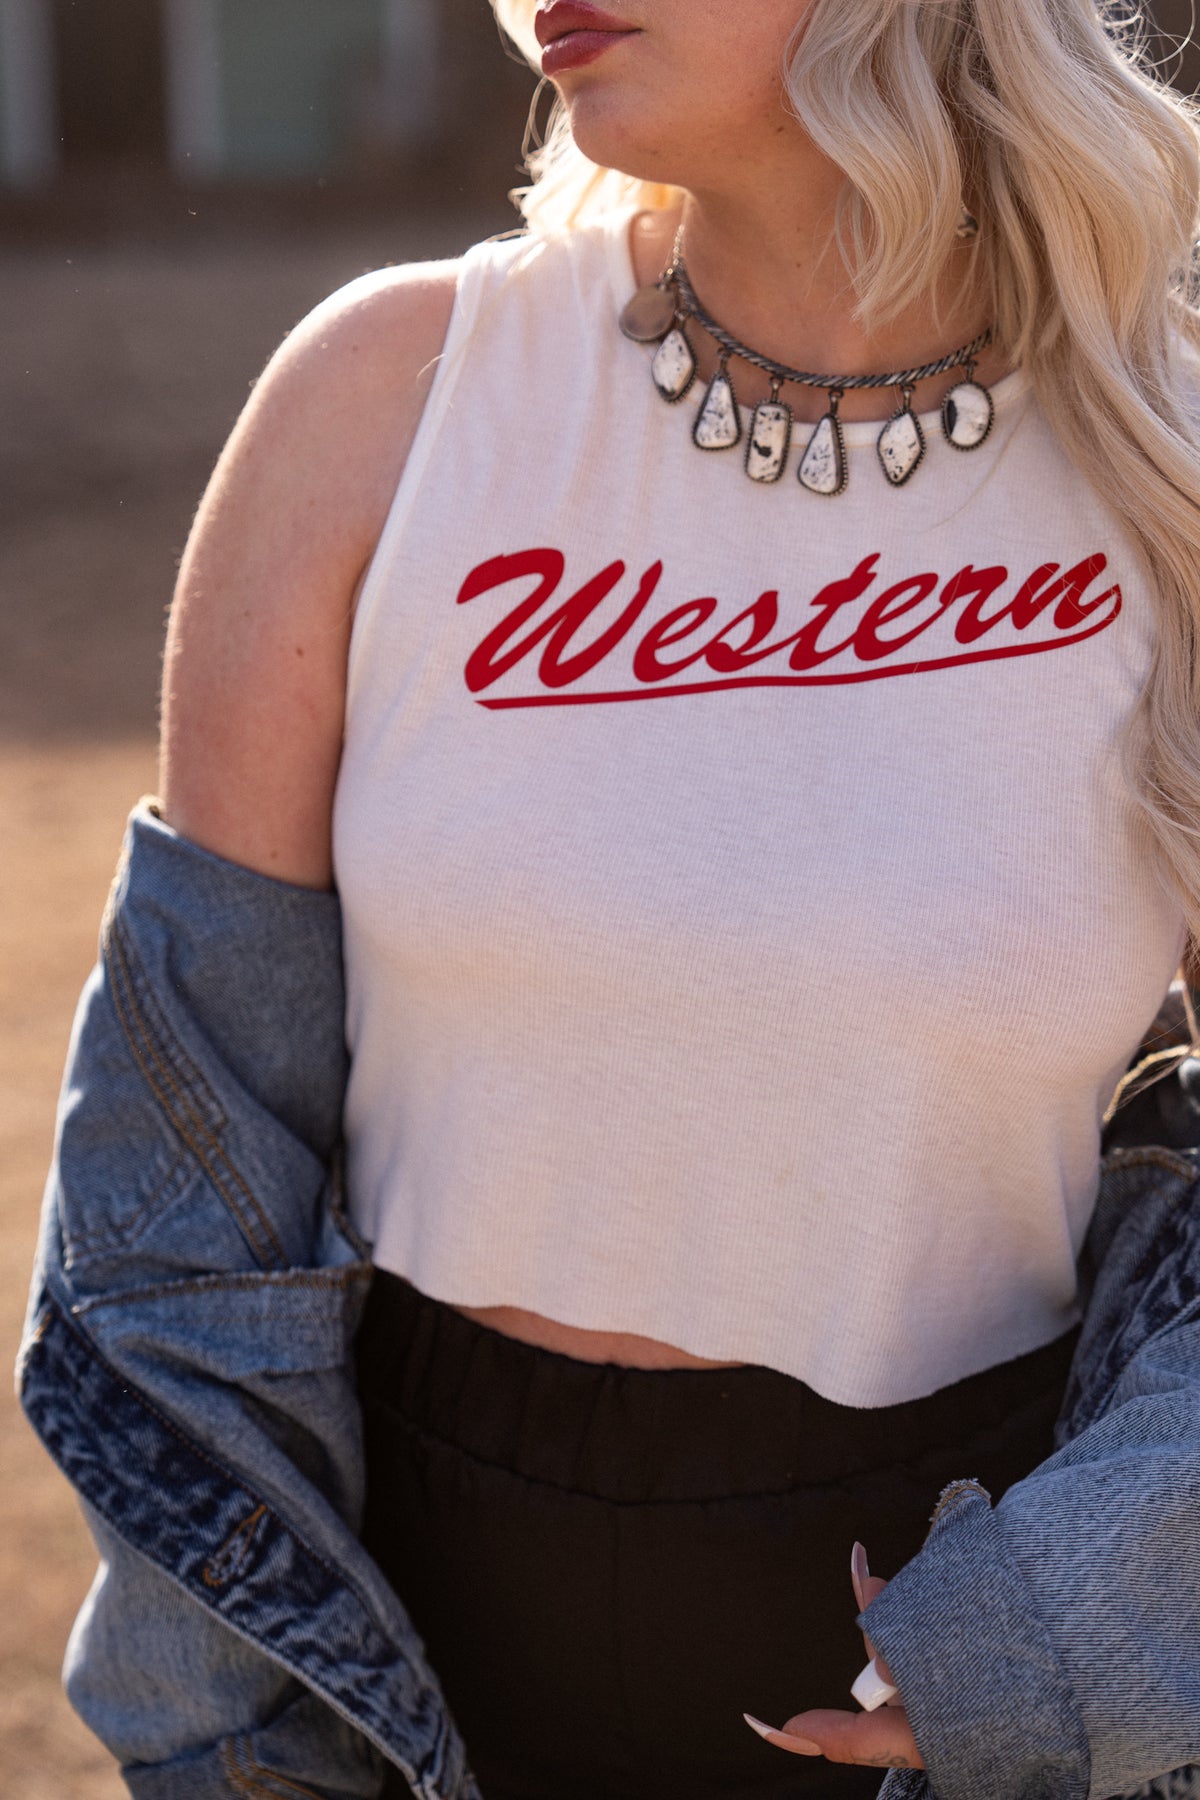 Let’s Get Western Baby Tee